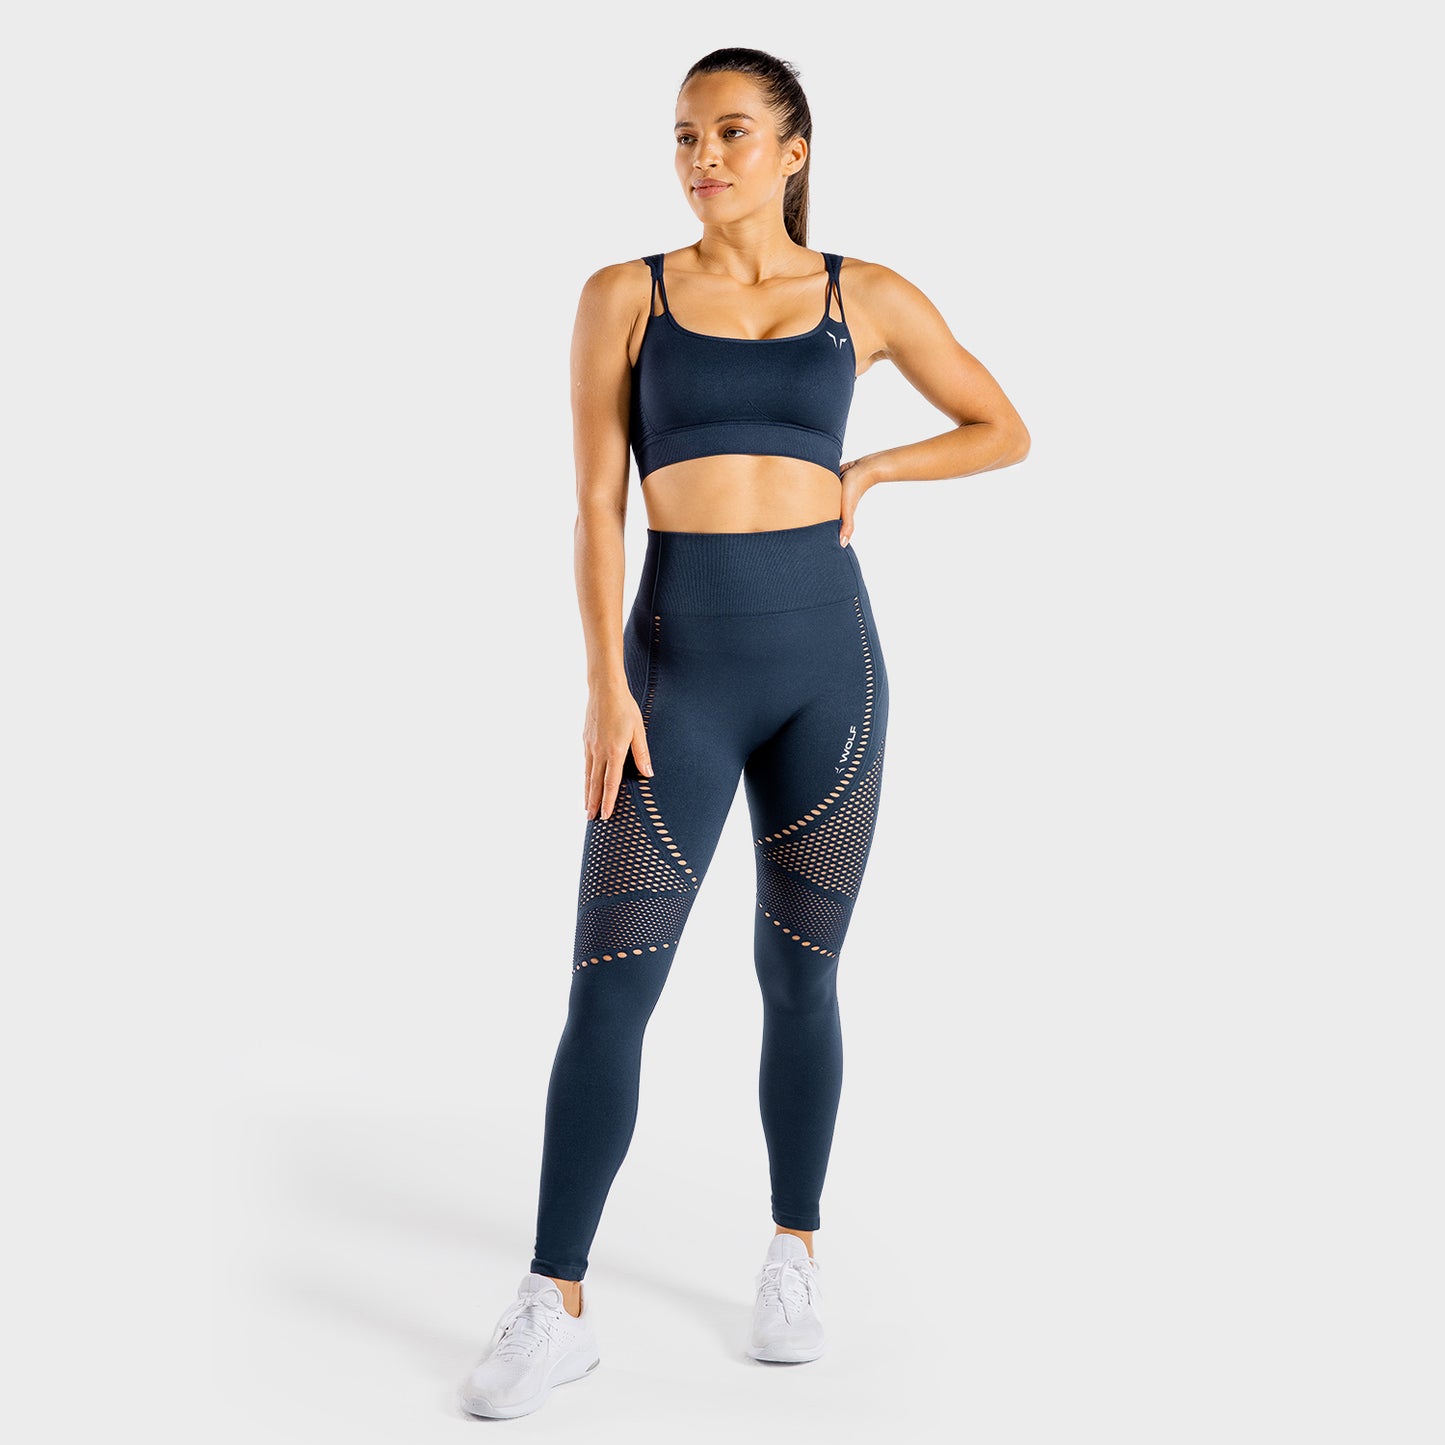 squatwolf-gym-leggings-for-women-meta-seamless-leggings-navy-workout-clothes